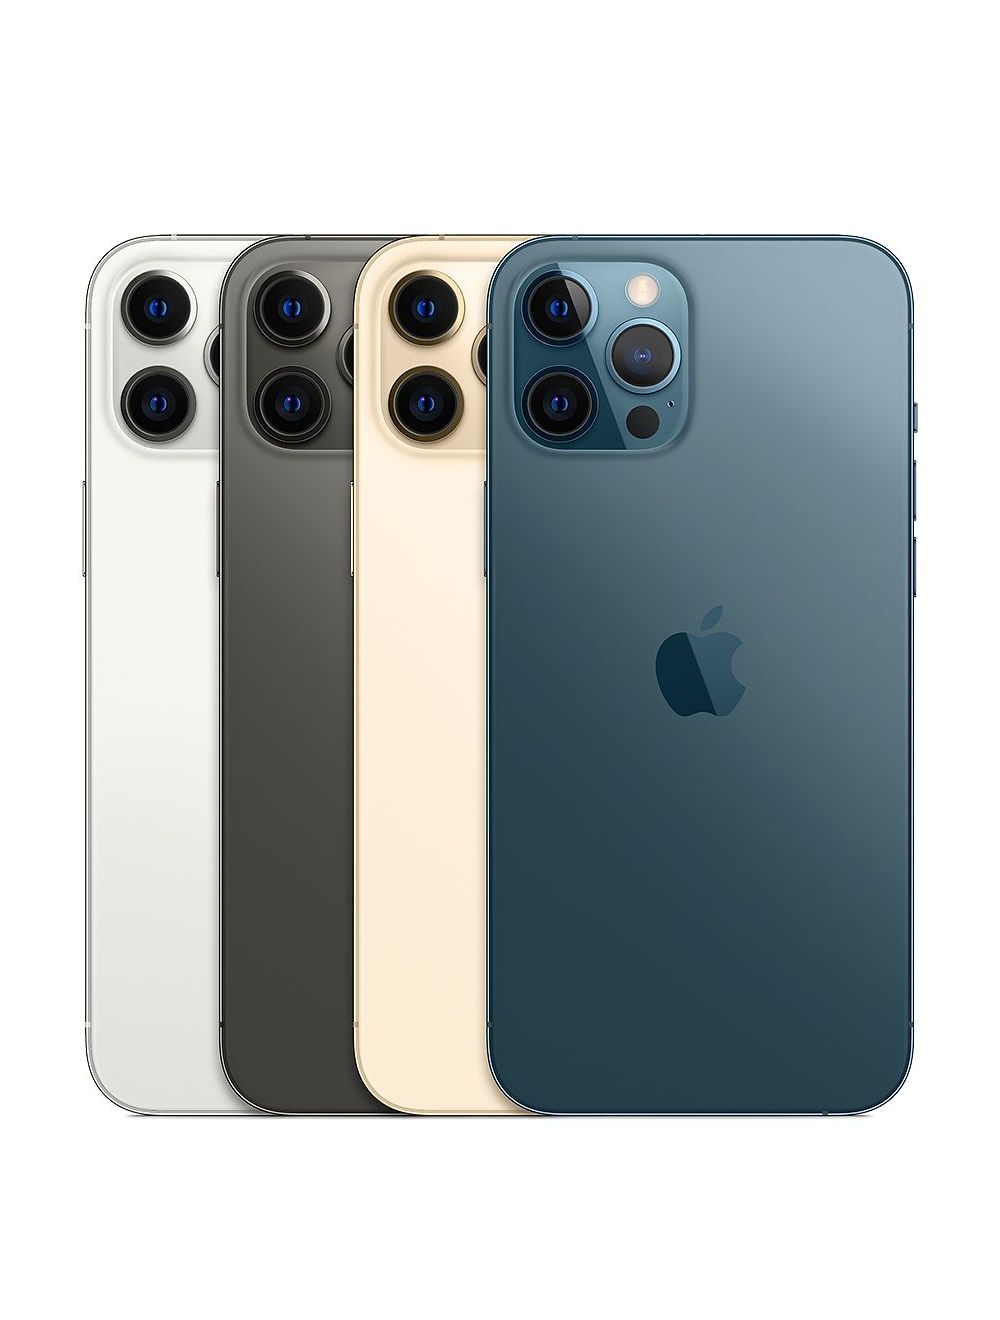 Apple Iphone 12 Pro Max 512gb Price In Nepal